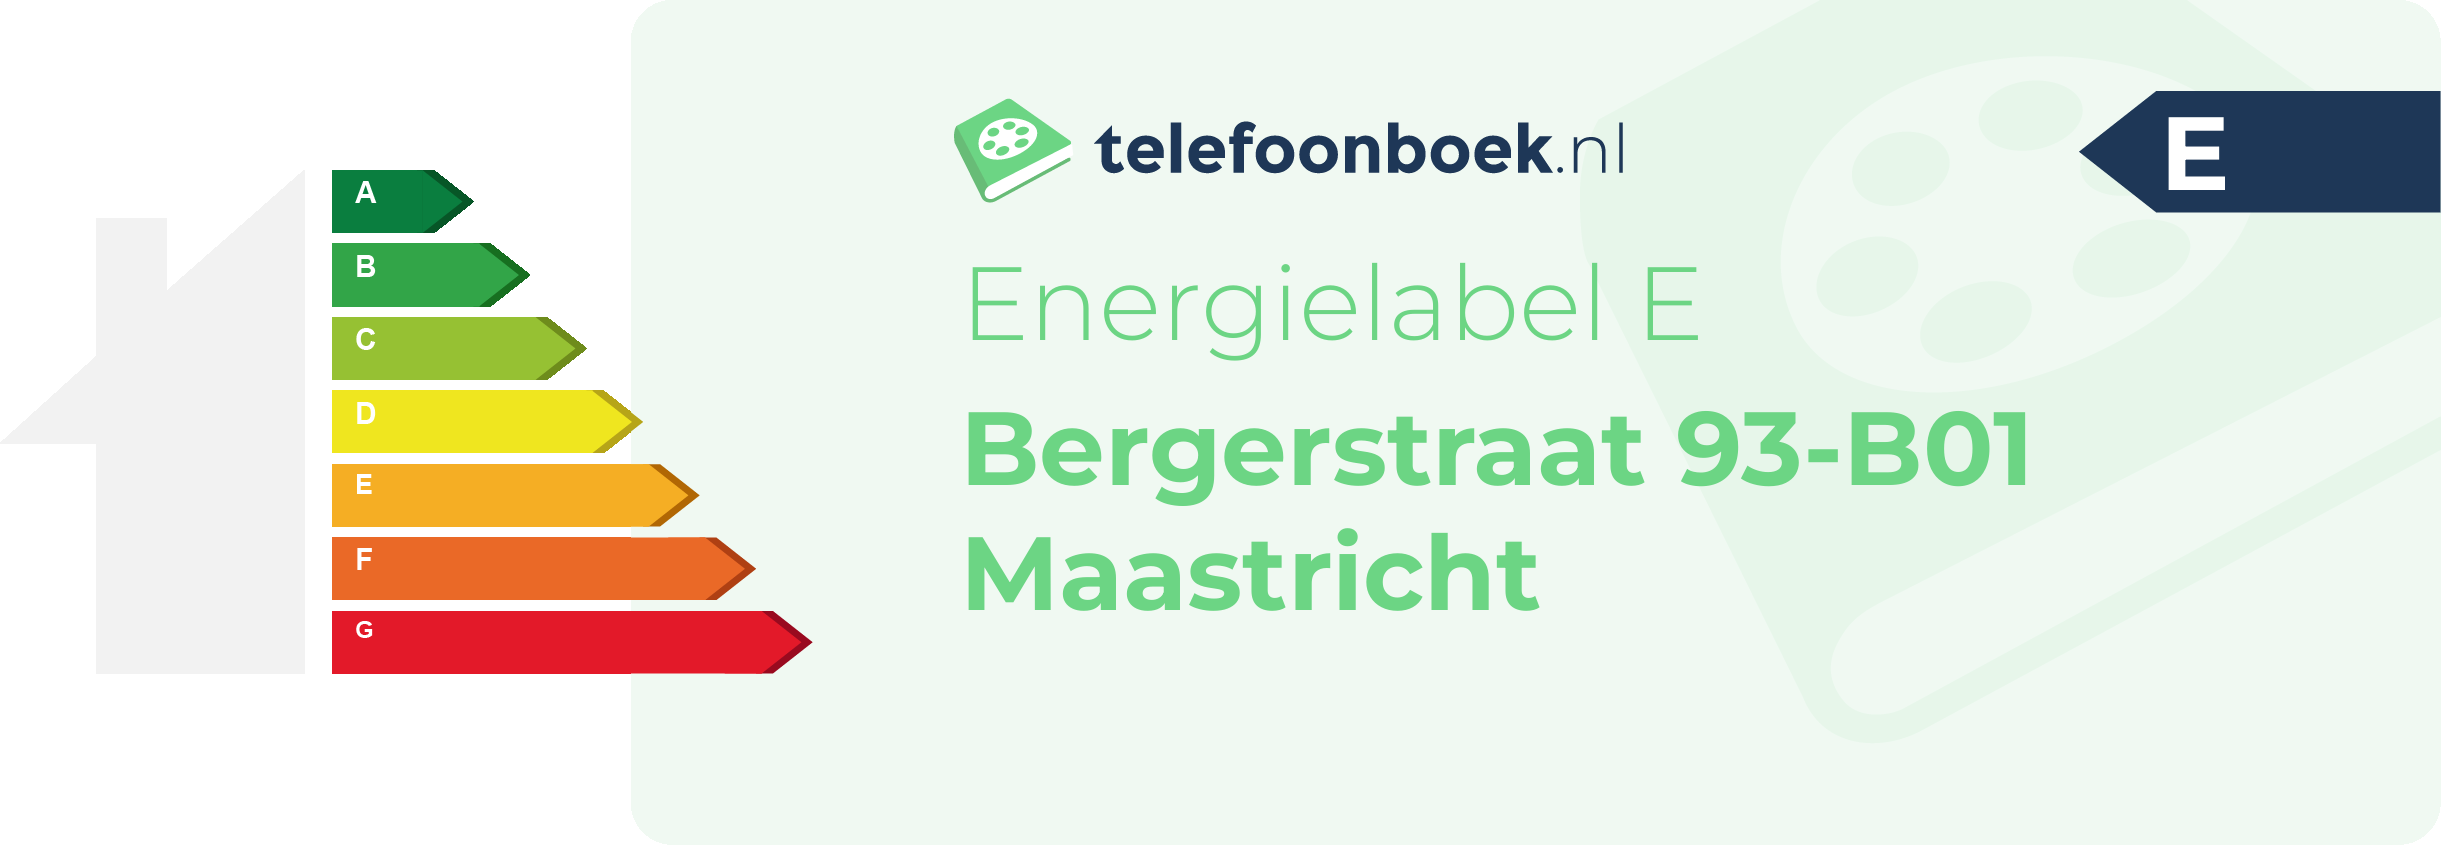 Energielabel Bergerstraat 93-B01 Maastricht